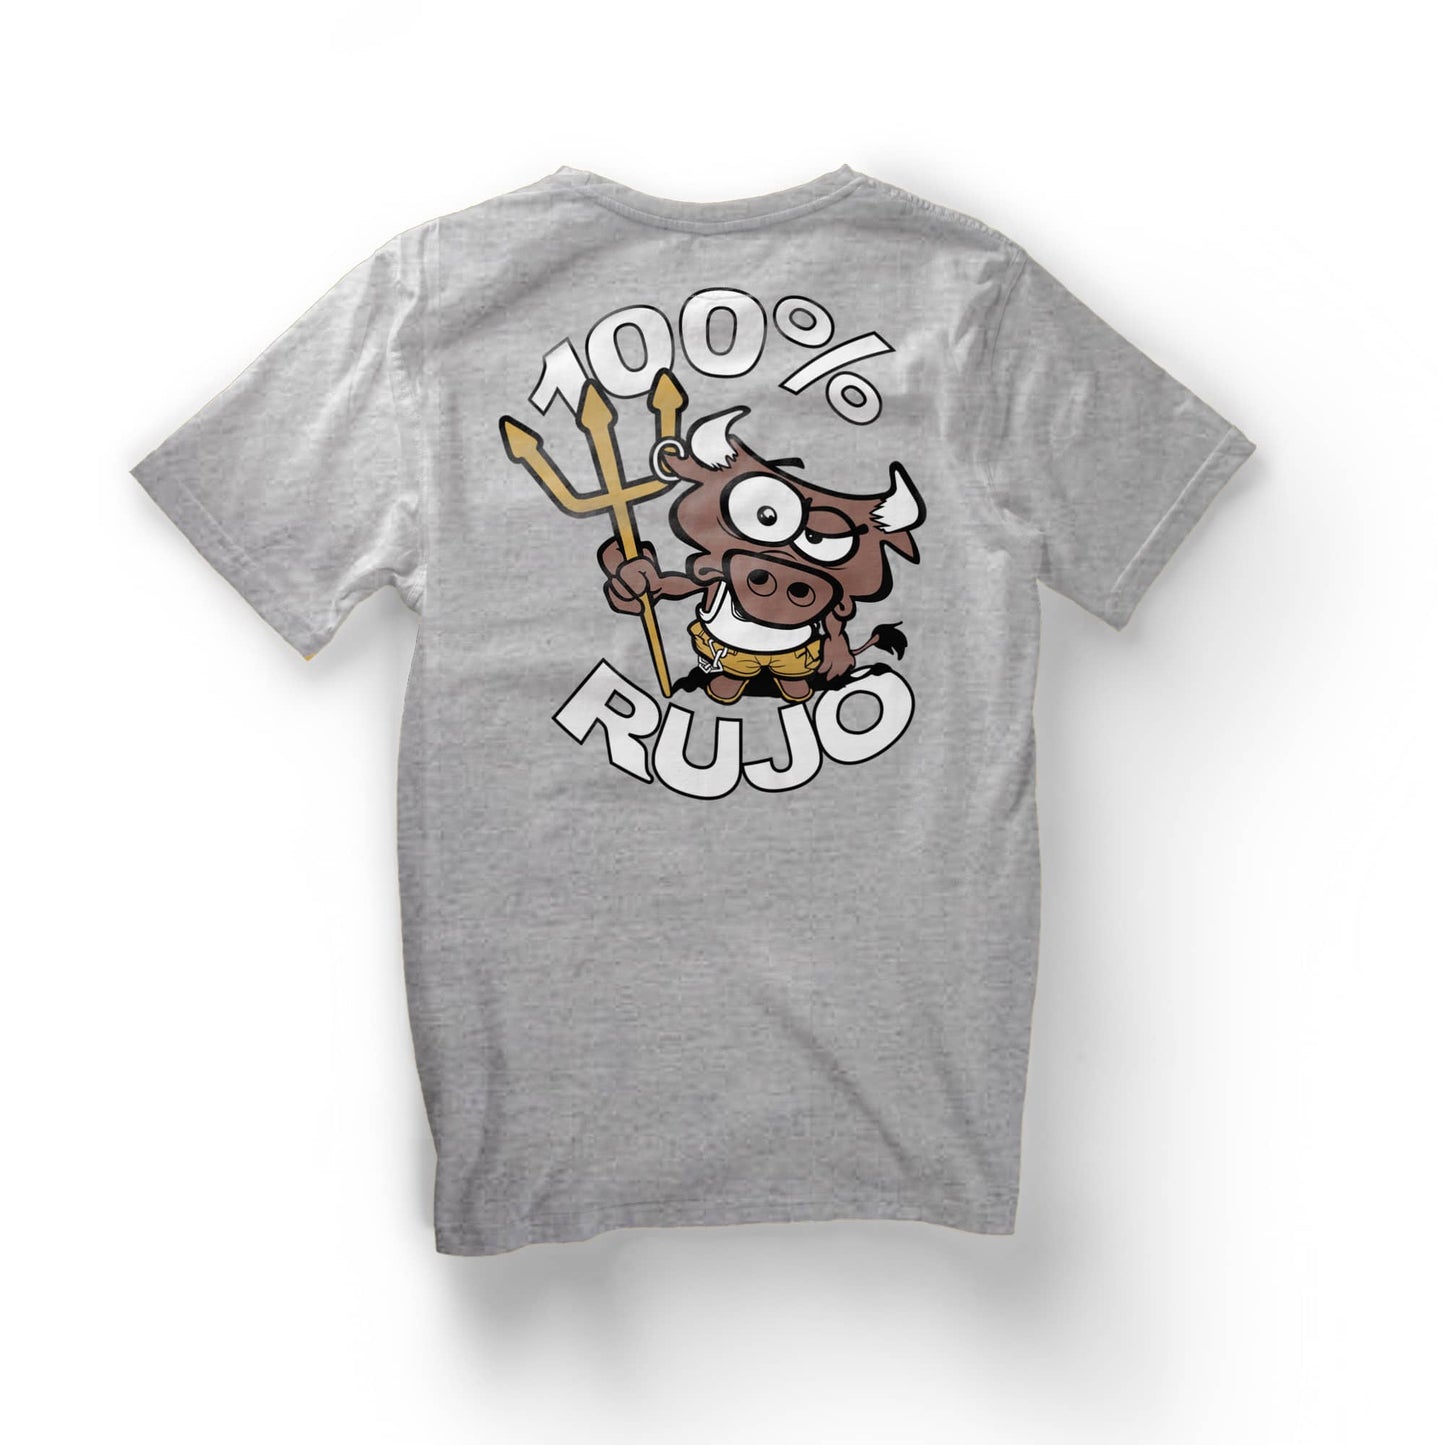 T-shirt 100% RUJO - CATARRHAL NOISE